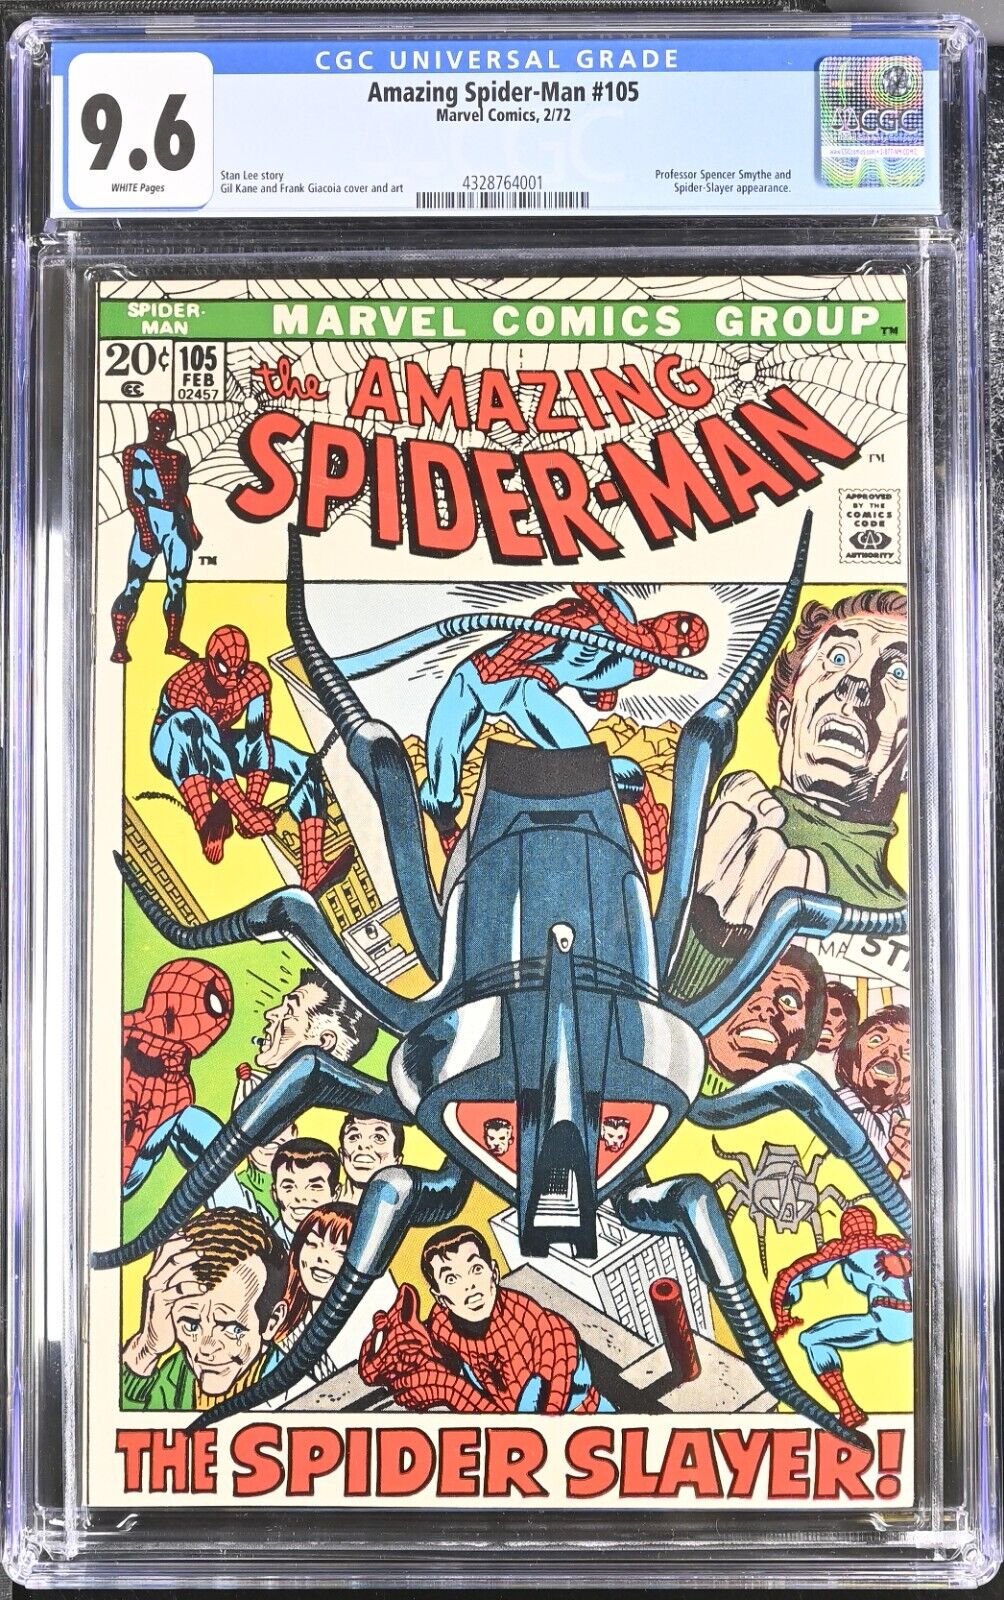 AMAZING SPIDER-MAN #105 CGC 9.6 WP MARVEL COMICS FEBRUARY 1972 SPIDER-SLAYER APP